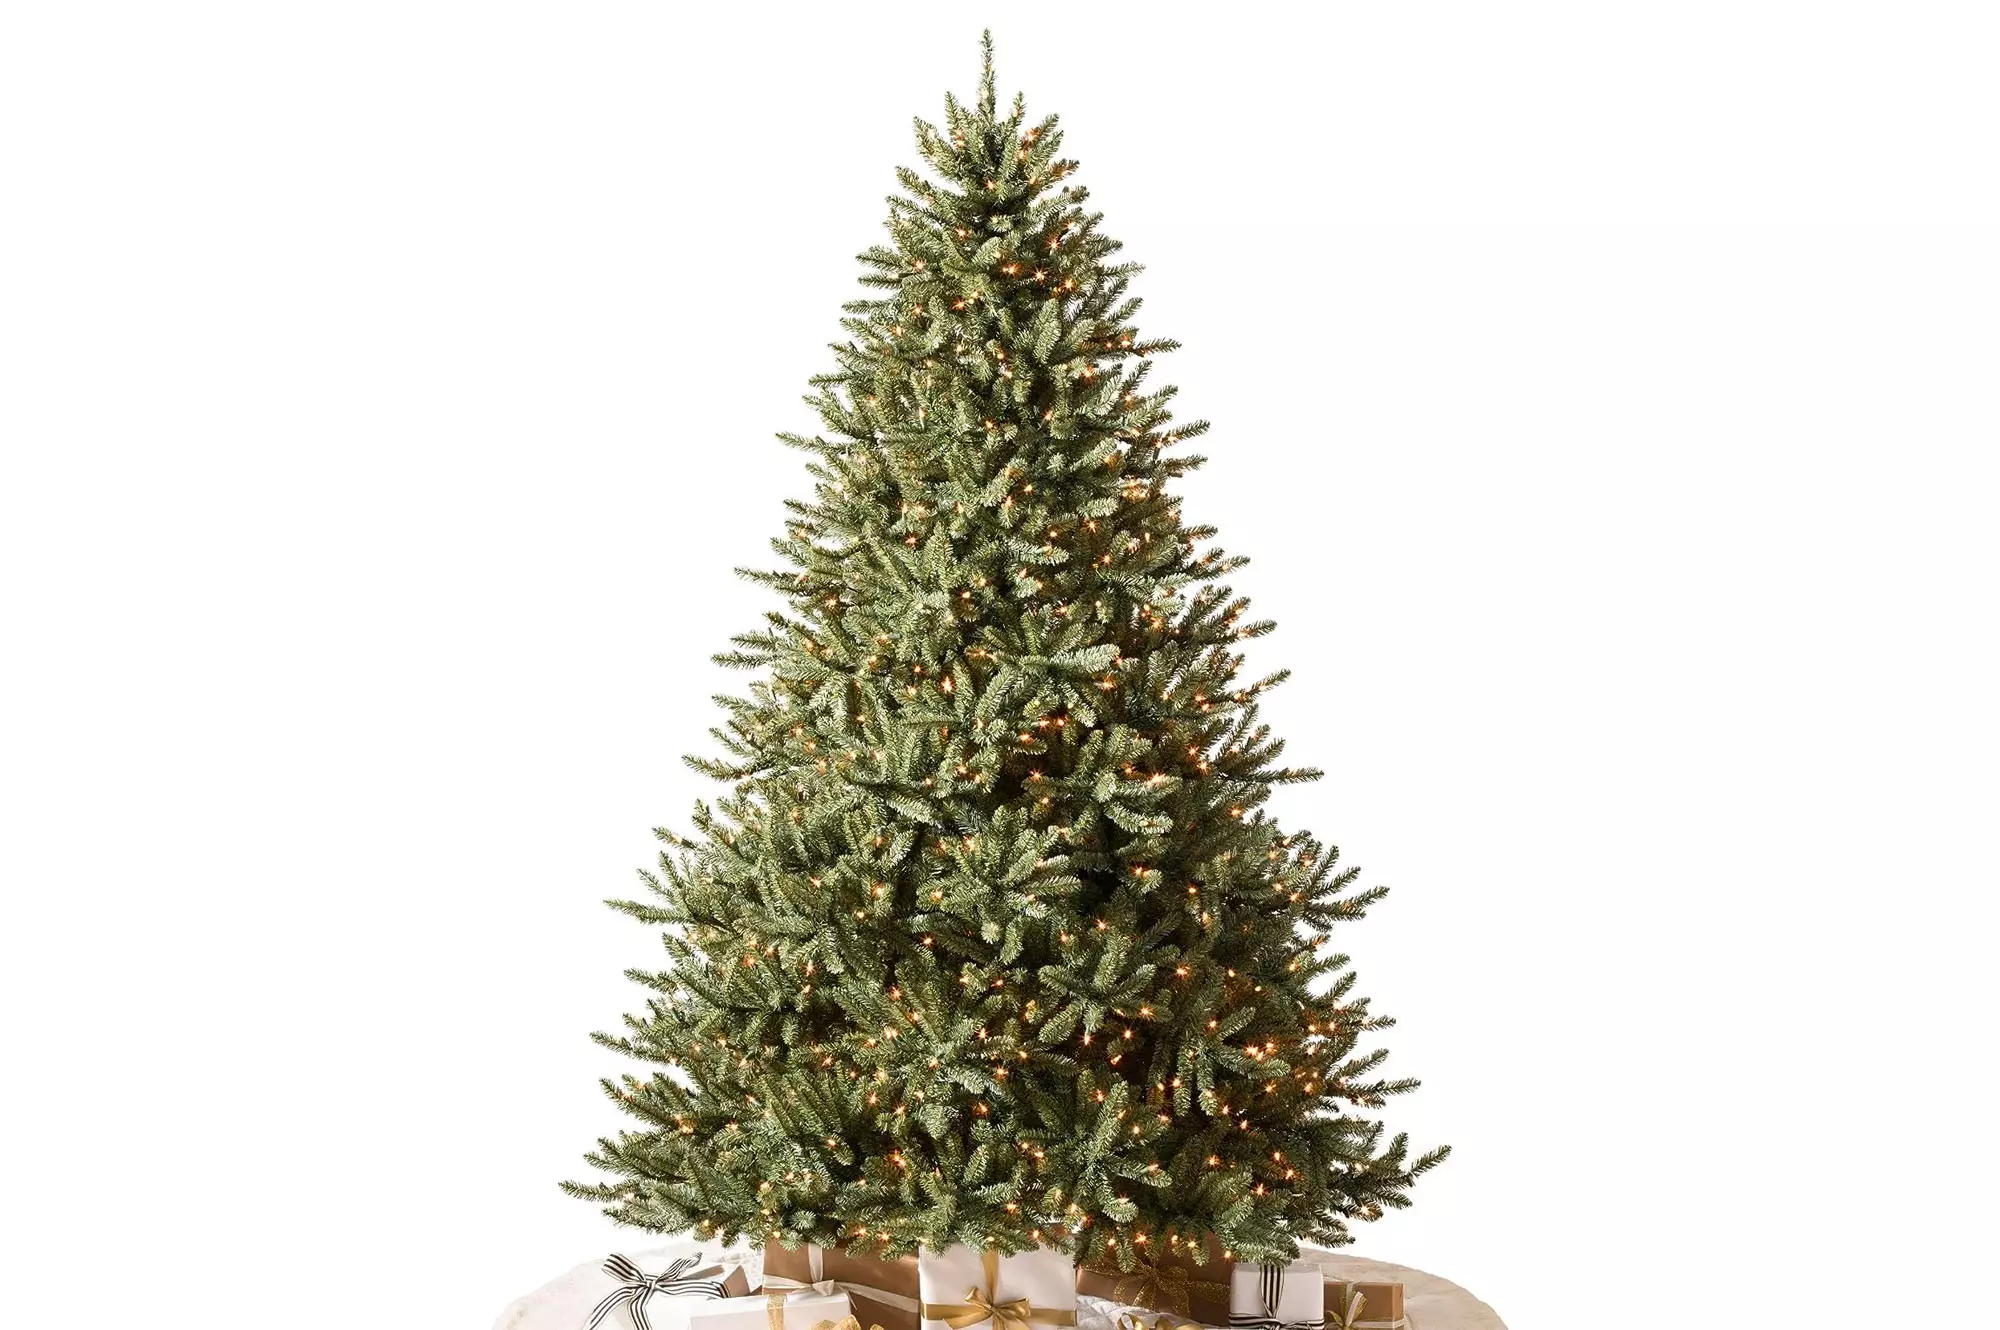 A pre-lit artificial Christmas tree.